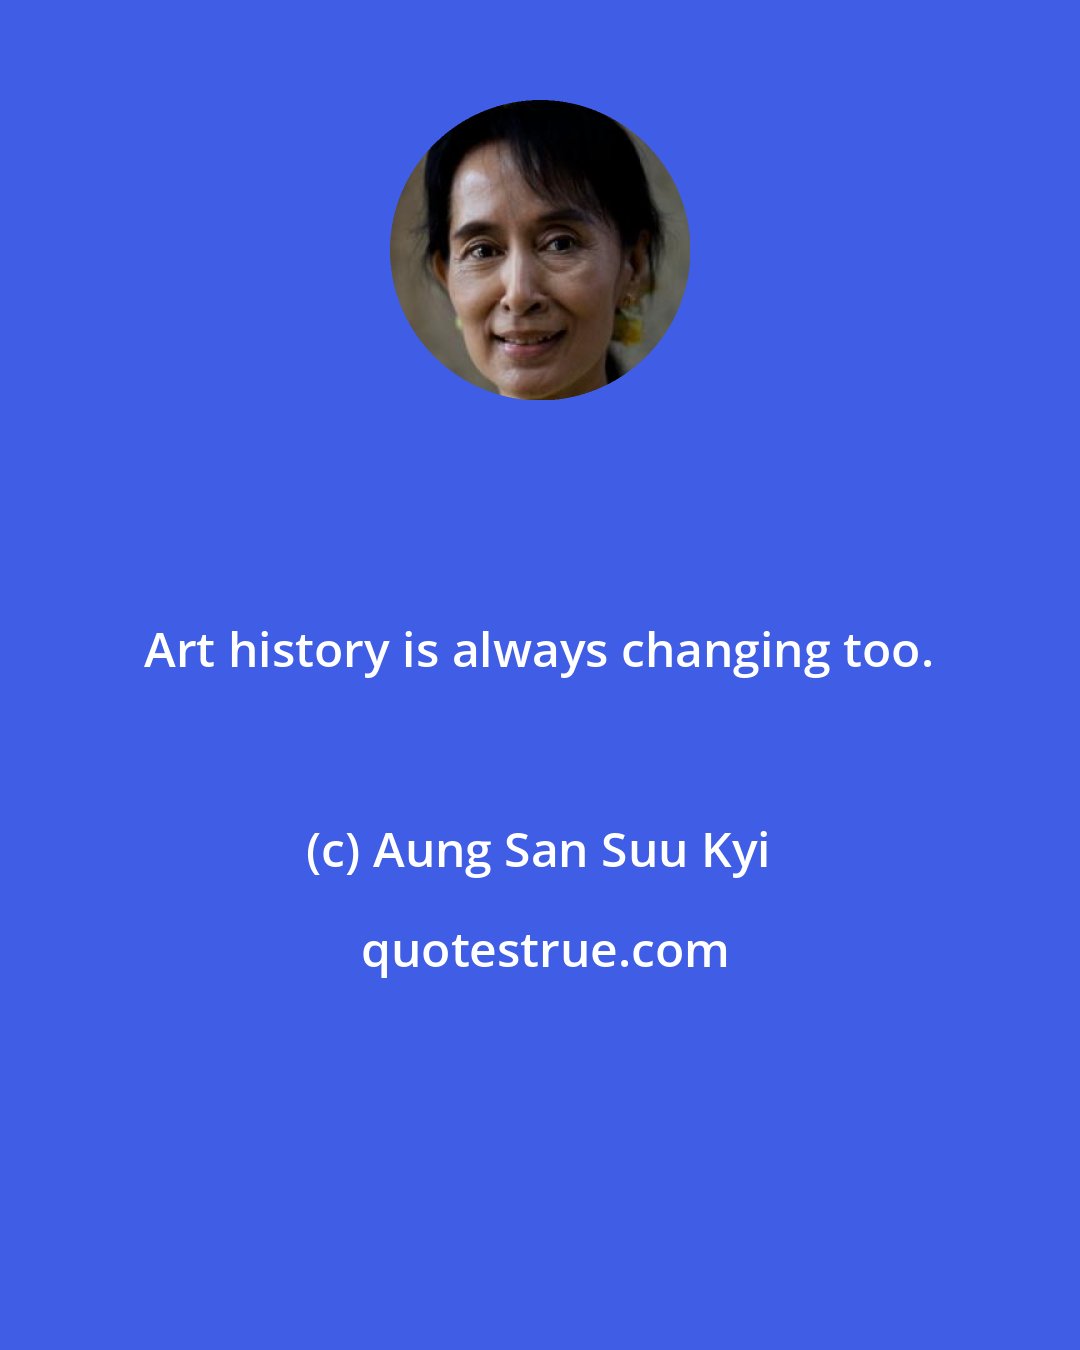 Aung San Suu Kyi: Art history is always changing too.